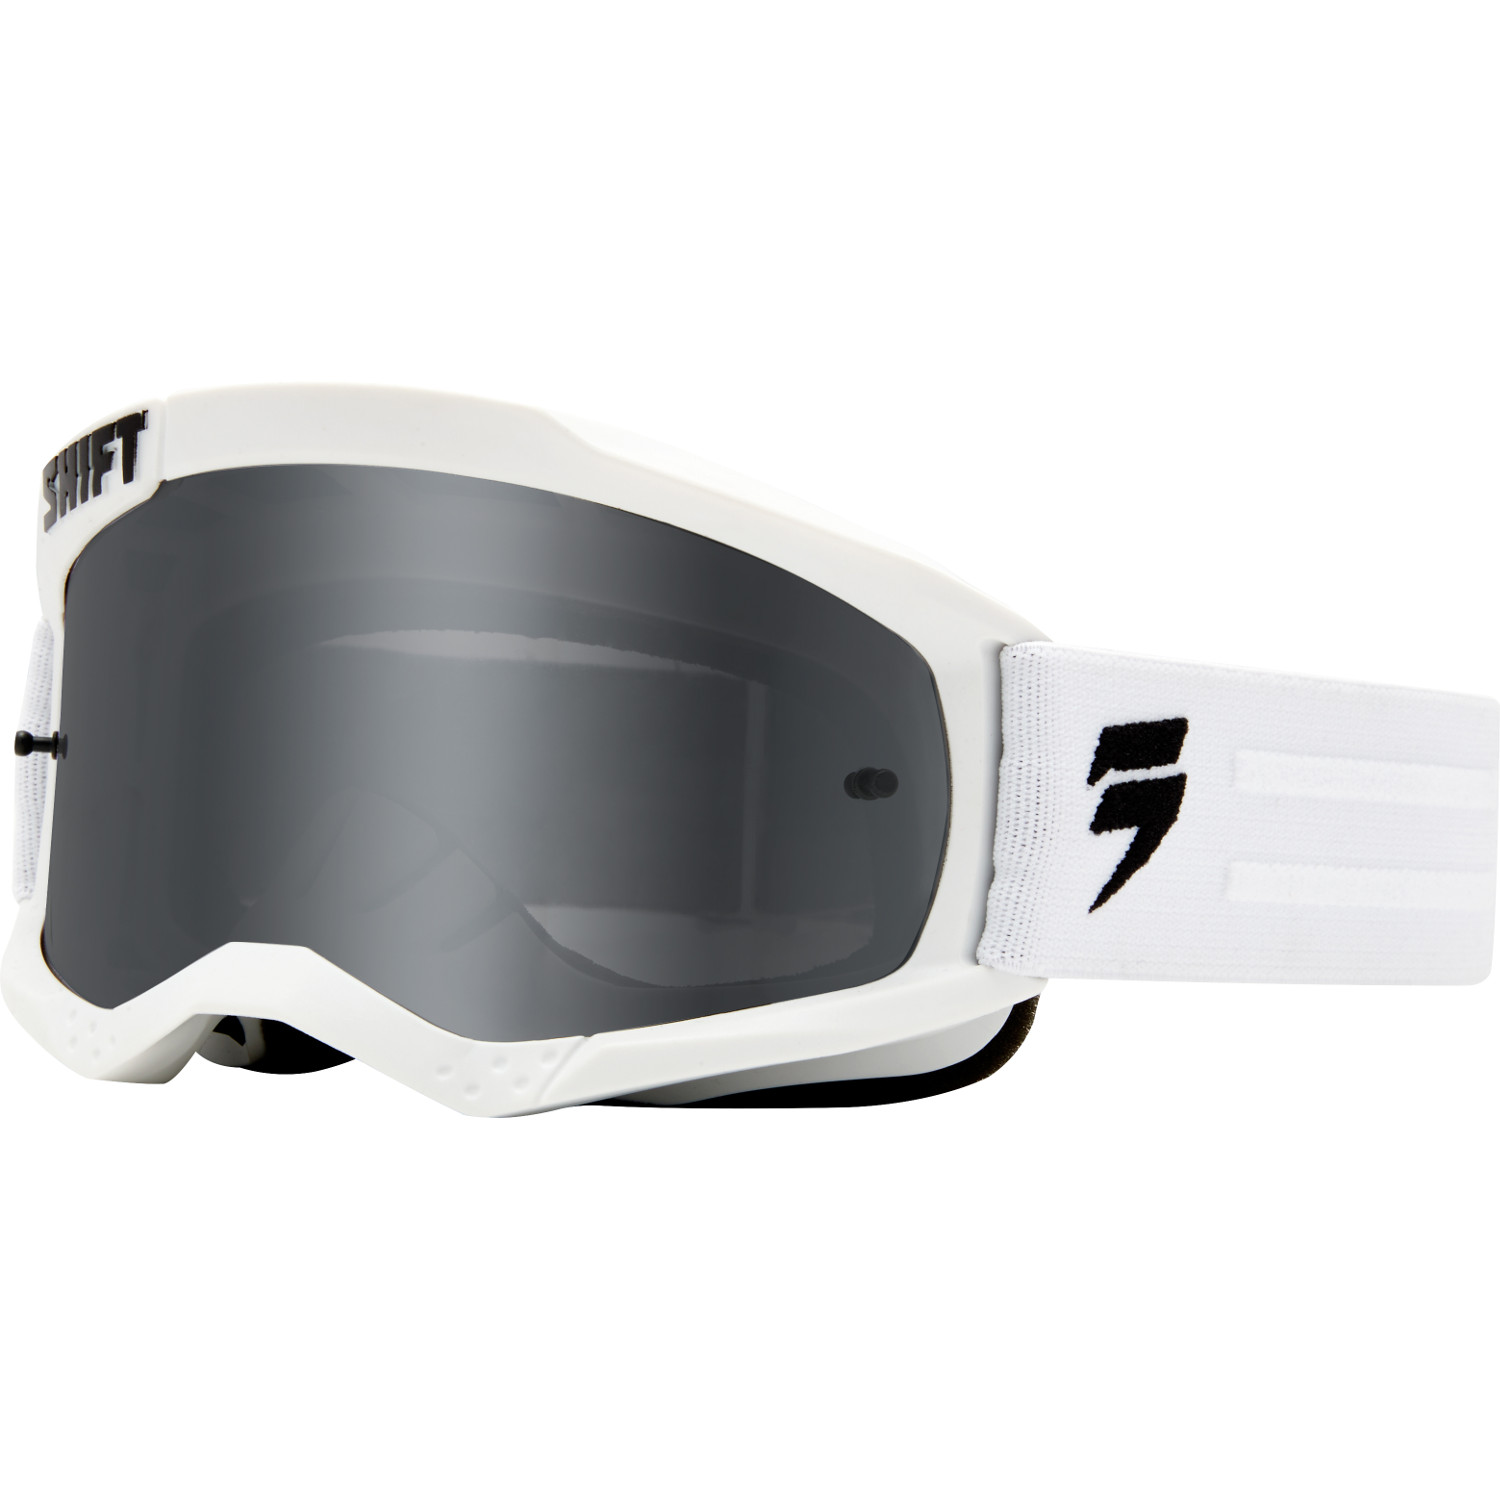 Shift Goggle Whit3 Label White - Chrome/Spark Lens